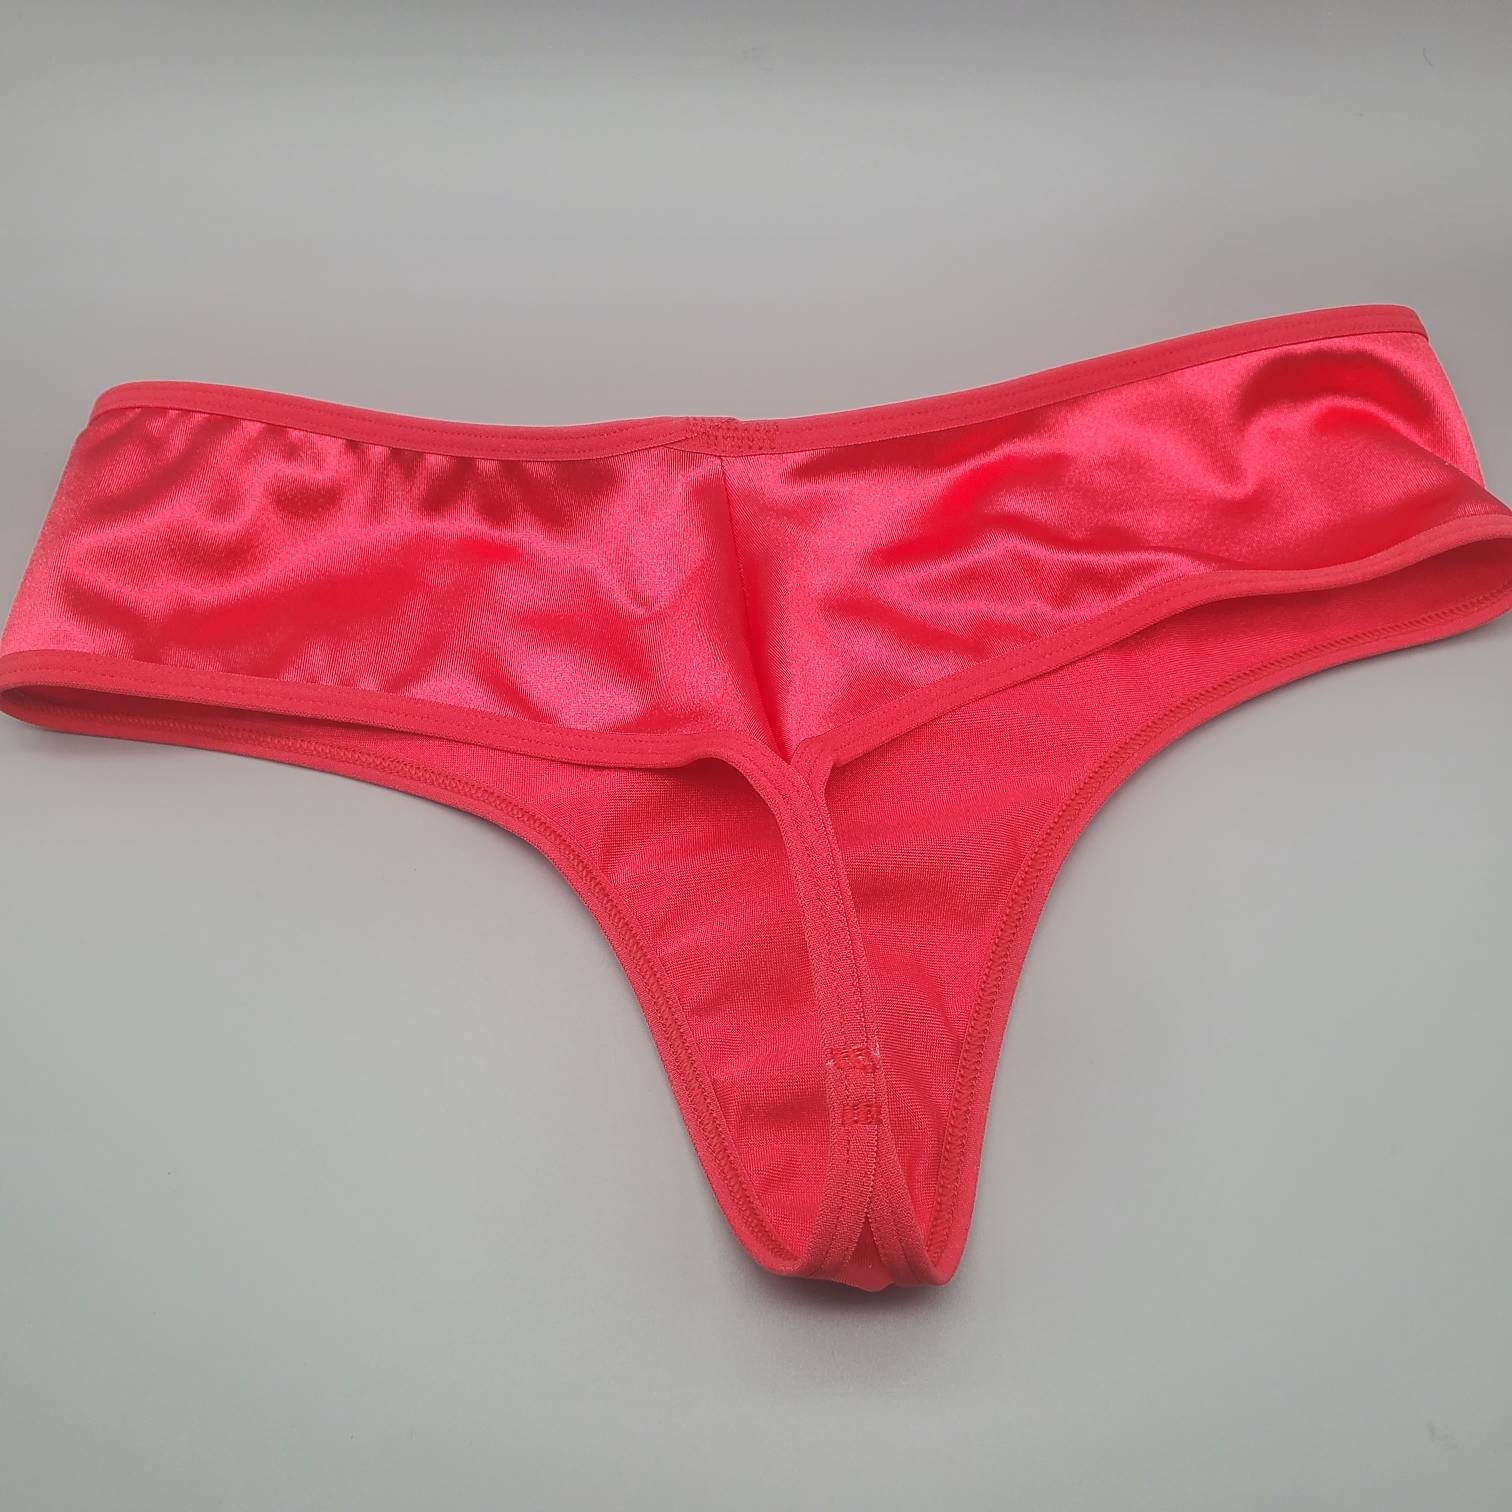 Red Satin Panties Satin Underwear Satin Lingerie Red Lingerie | Etsy